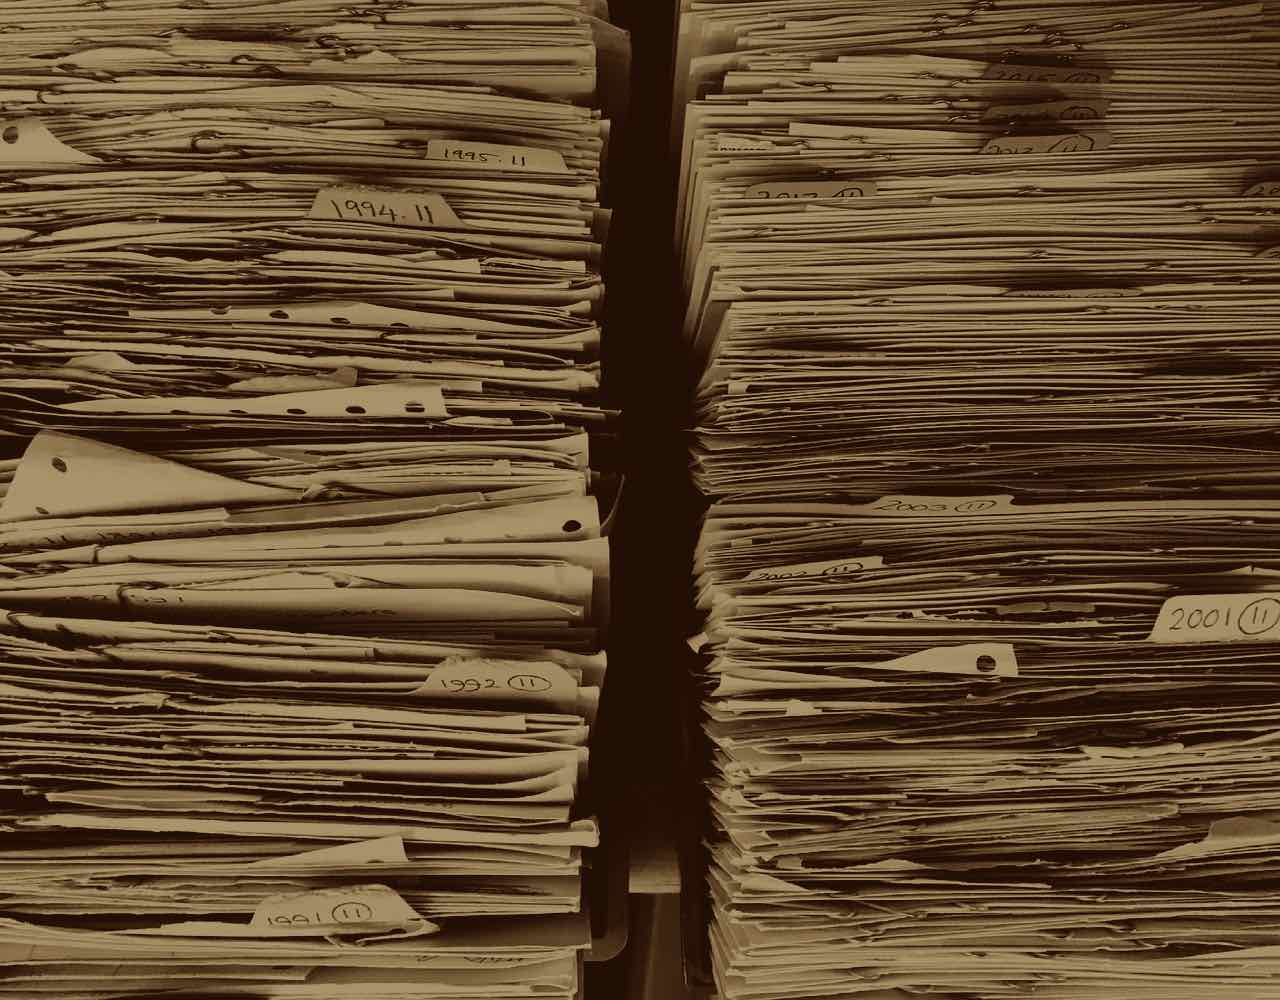 Piles of Paperwork